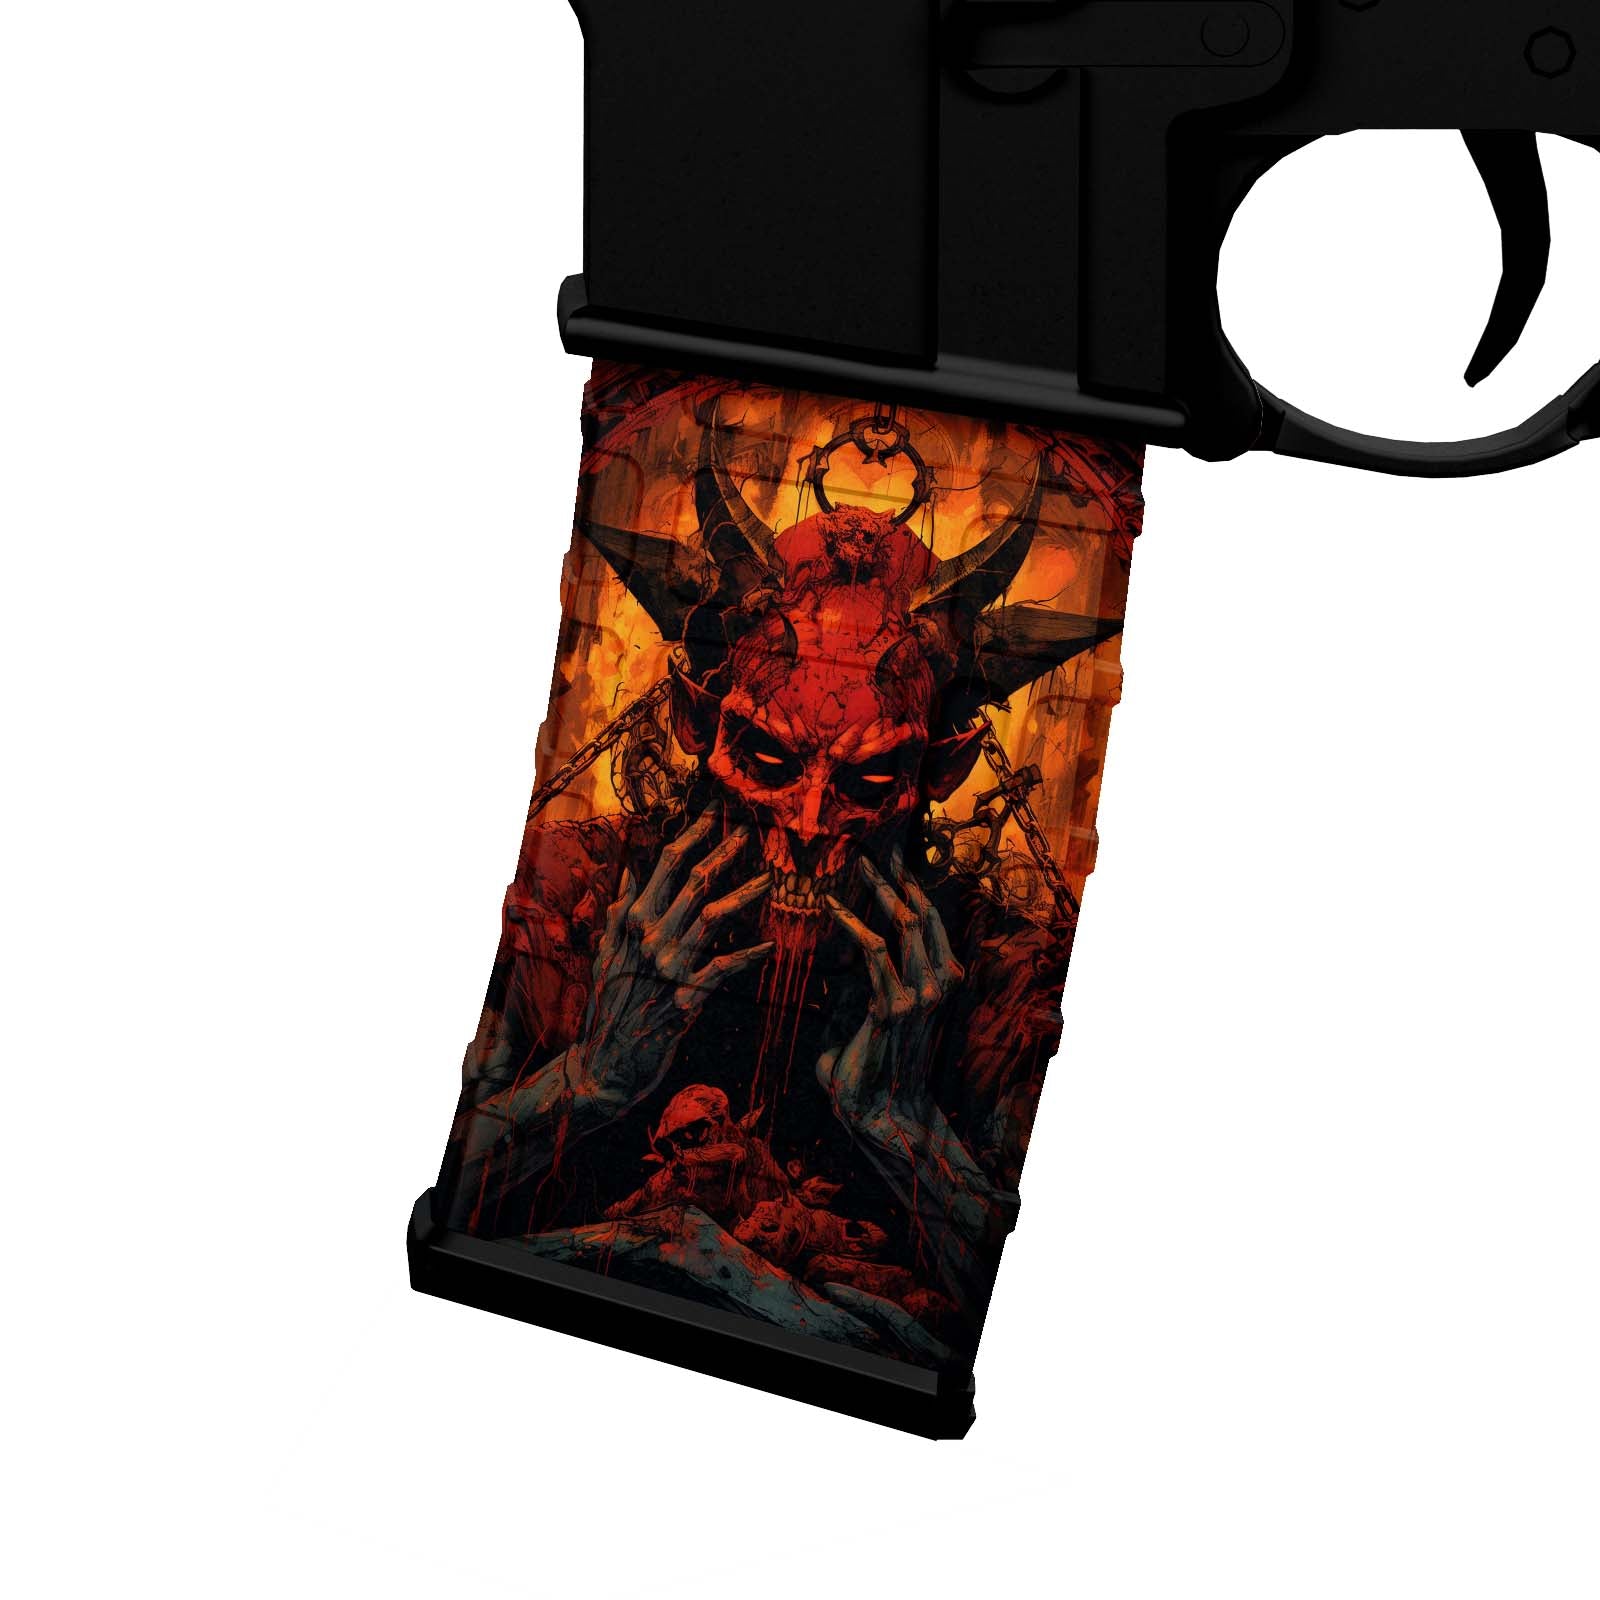 AR-15 Mag Skin - The Devil